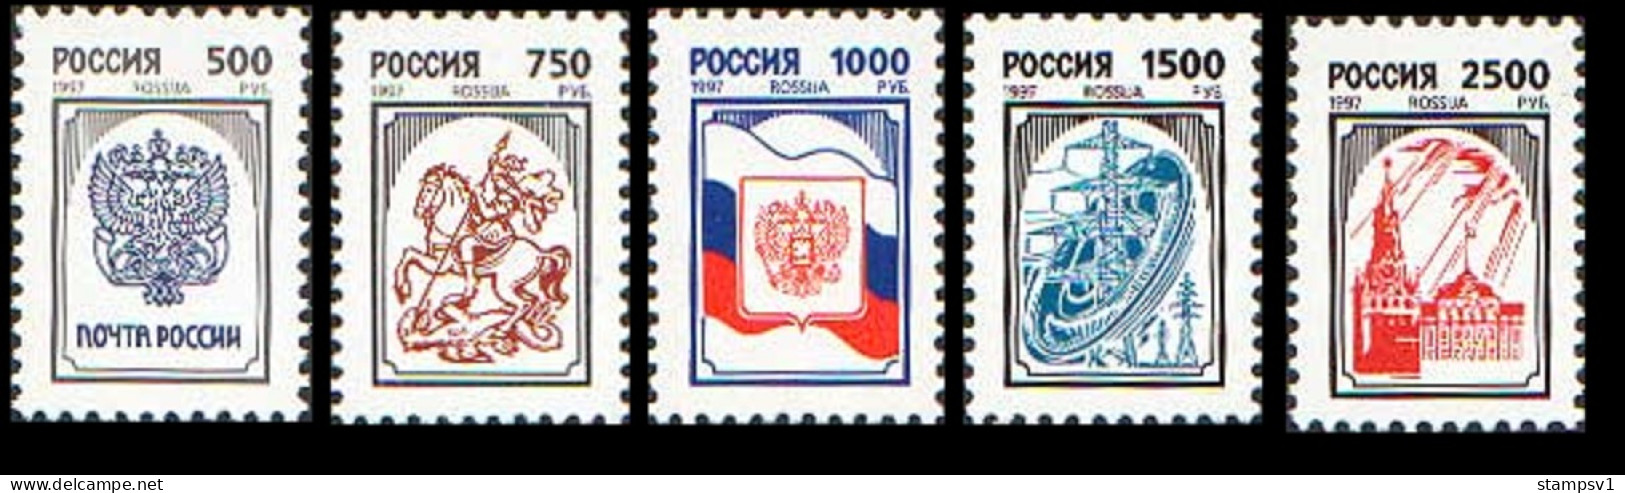 Russia 1997 Second Definitive Issue. Mi 562-66w Normal Paper - Nuevos